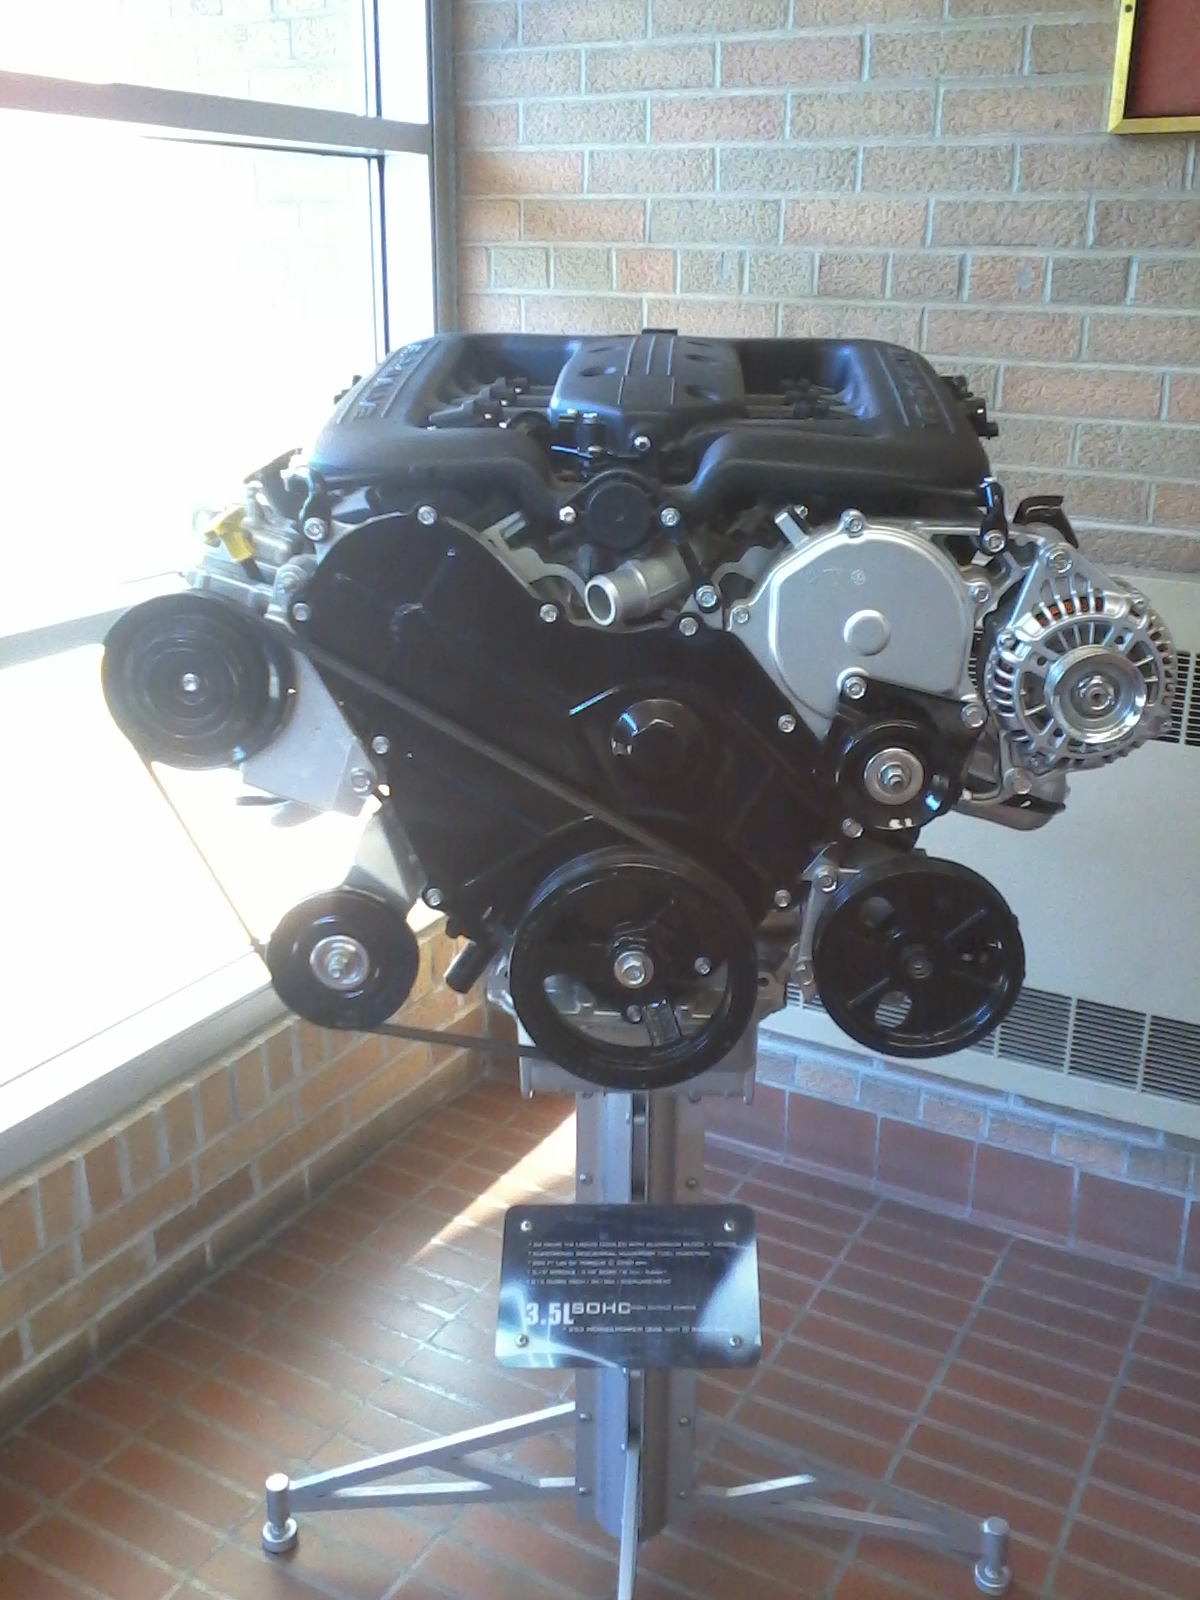 Chrysler SOHC V6 engine - Wikiwand 2000 chrysler 300m engine diagram 